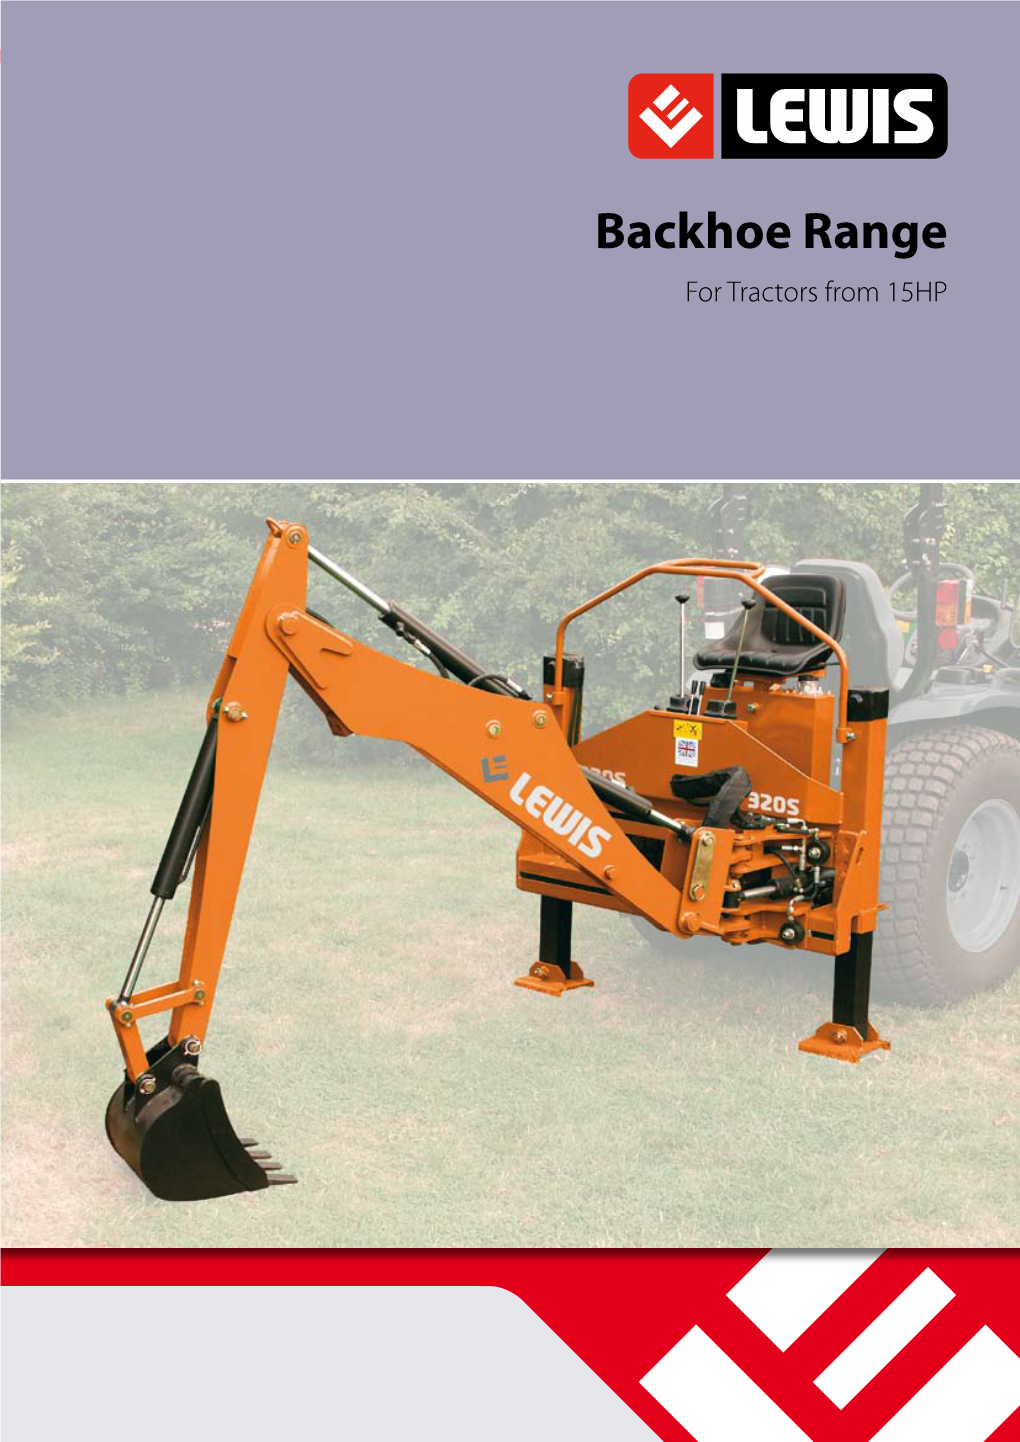 Backhoe Range for Tractors from 15HP LEWIS Backhoe Range